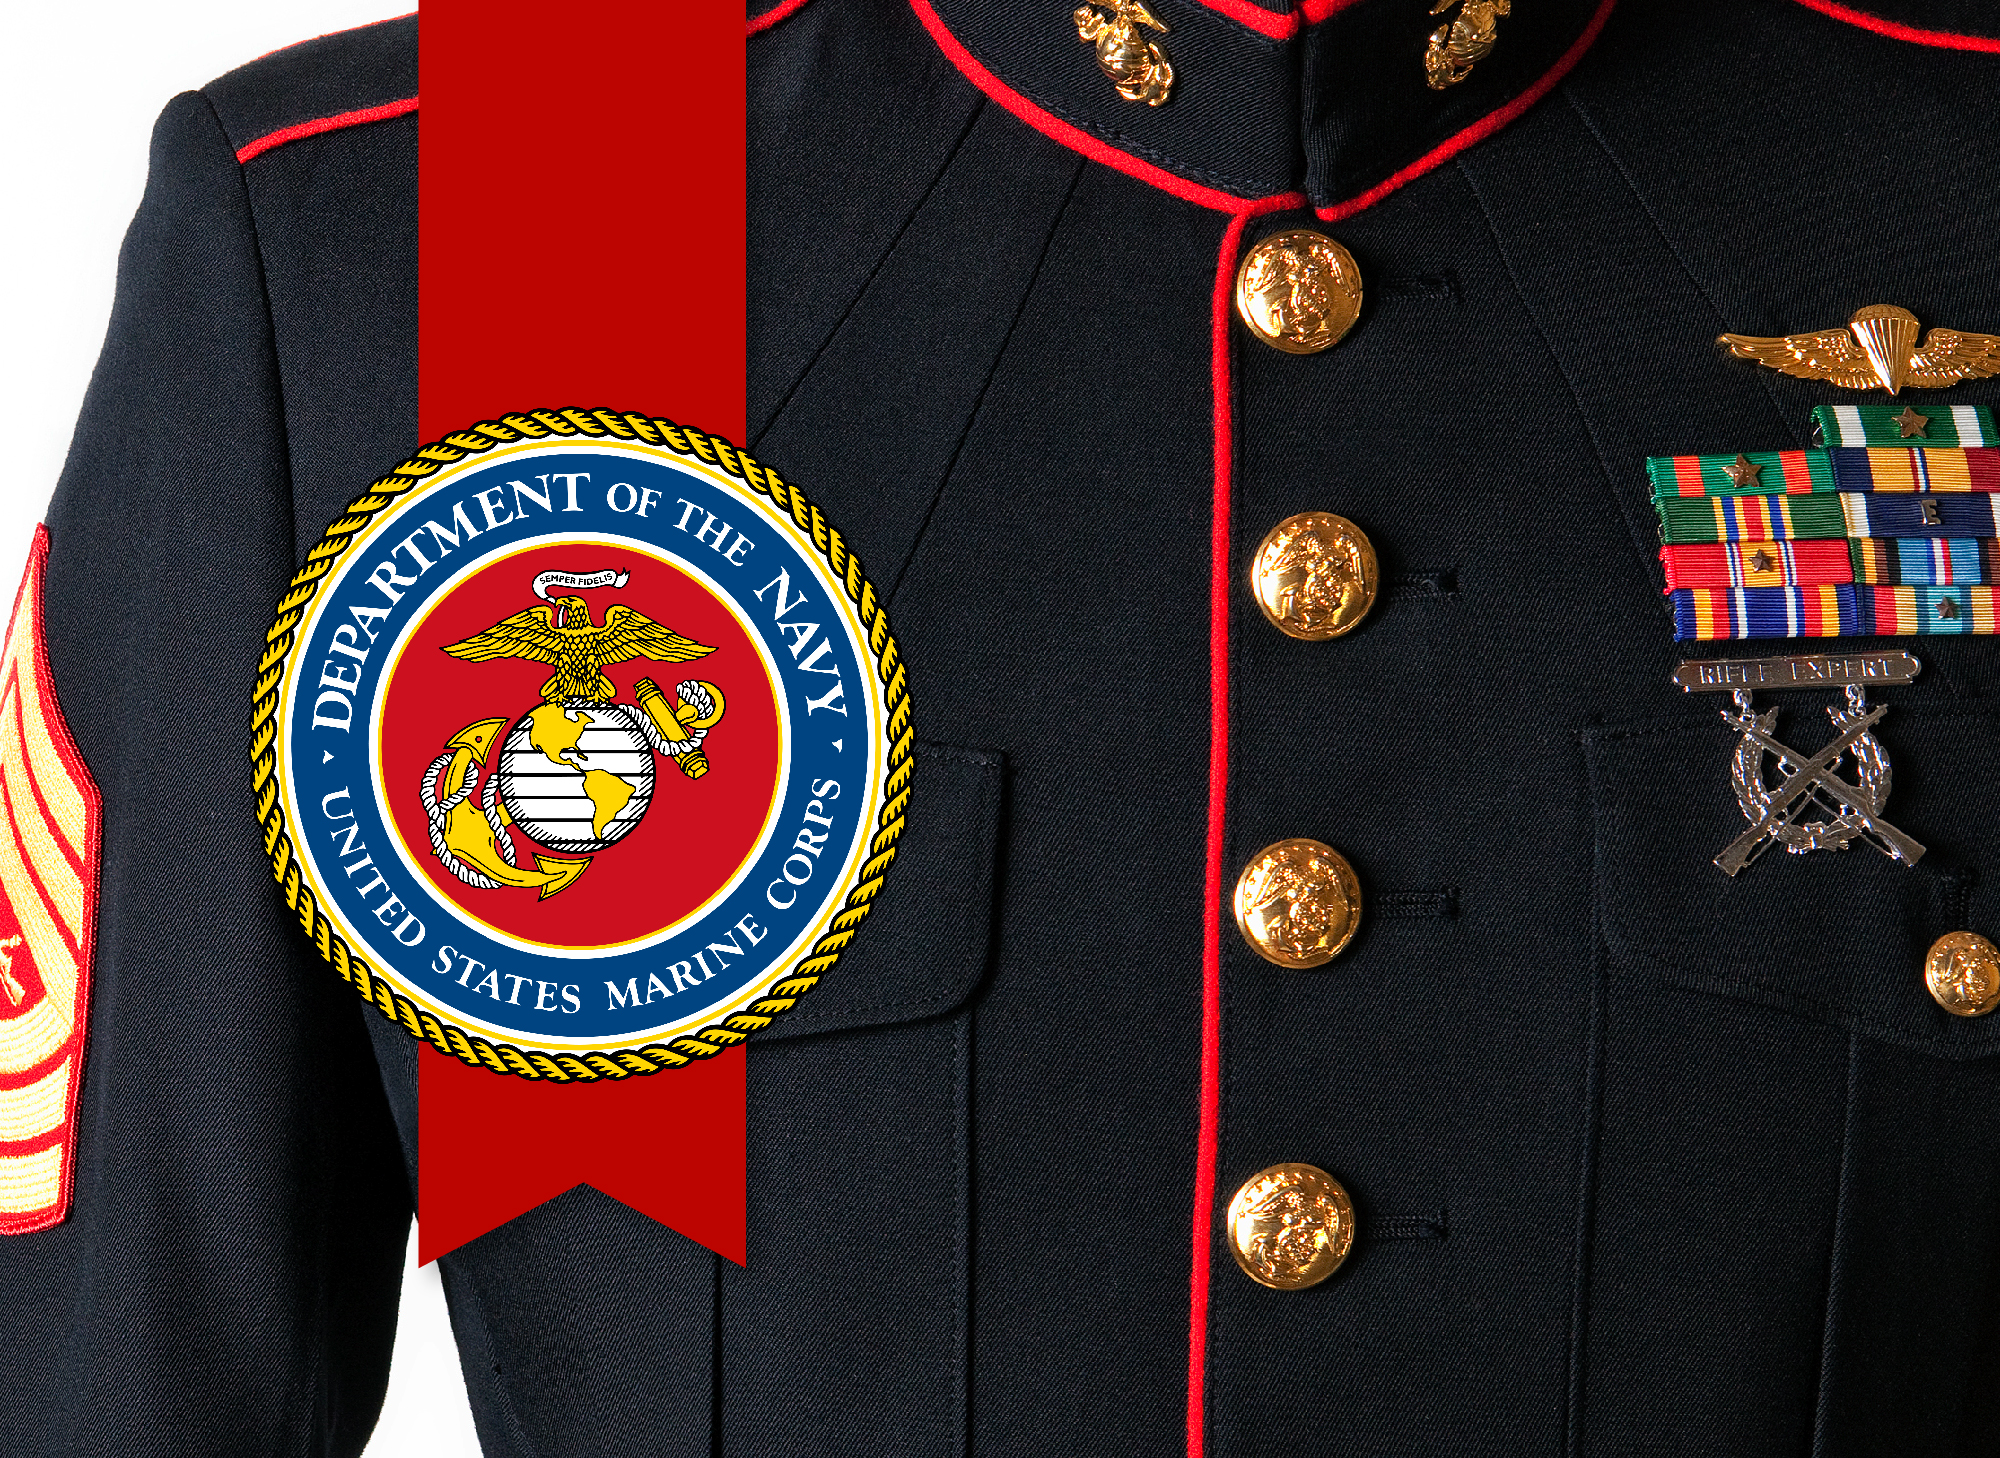 Marine Corps Birthday 2023, 248 Years of Fierce Dedication